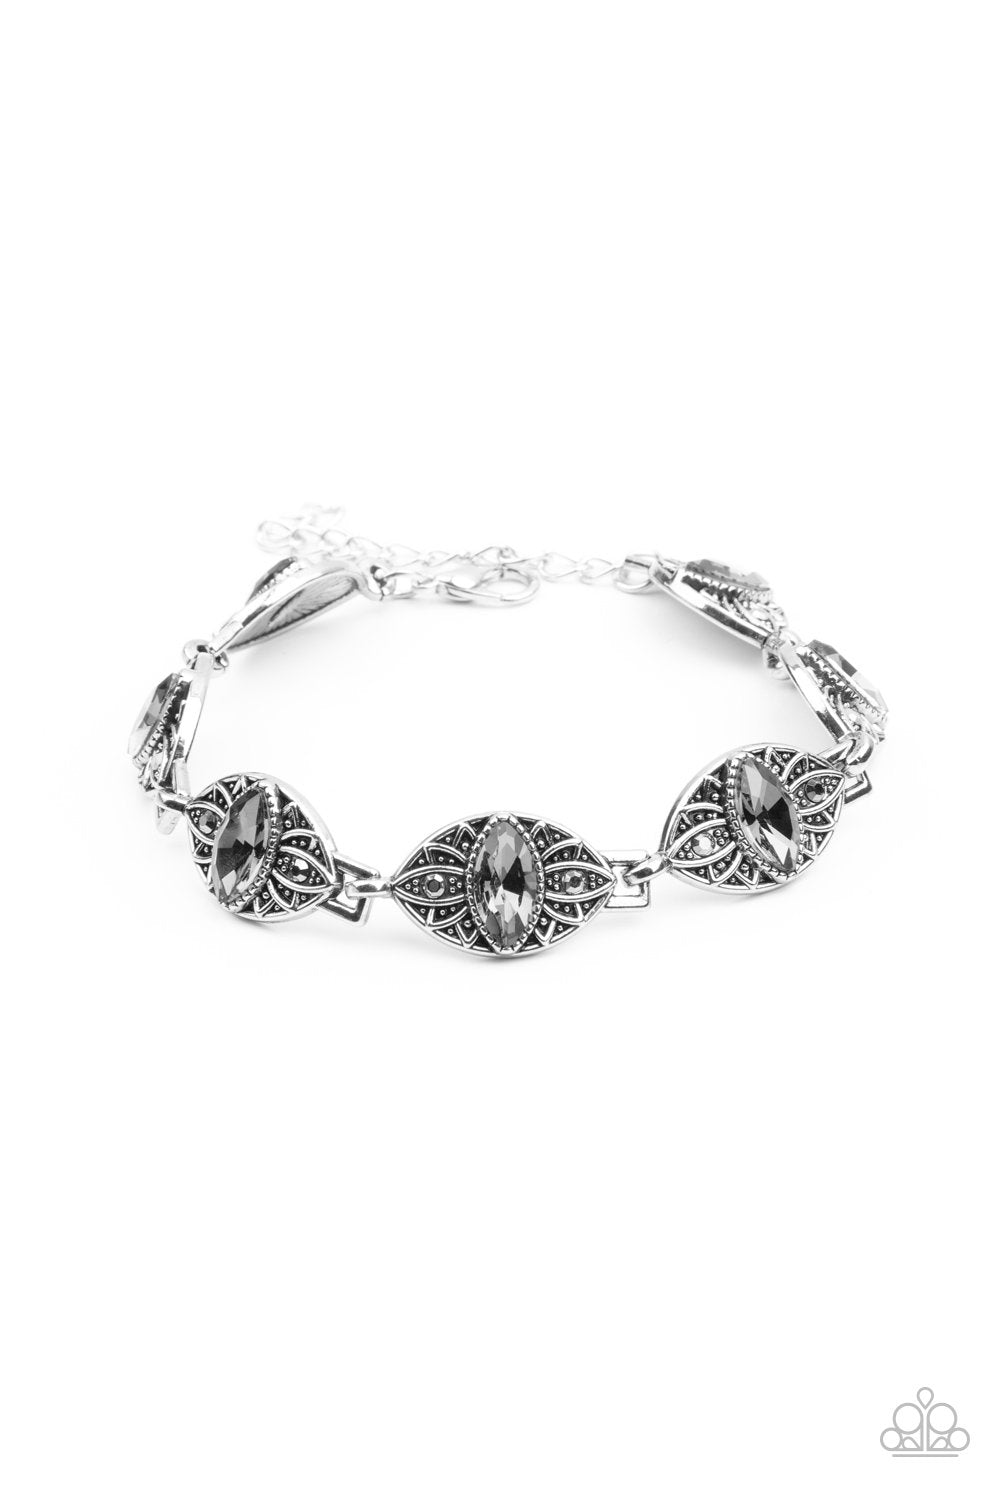 Crown Privilege Silver and Hematite Rhinestone Bracelet - Paparazzi Accessories- lightbox - CarasShop.com - $5 Jewelry by Cara Jewels